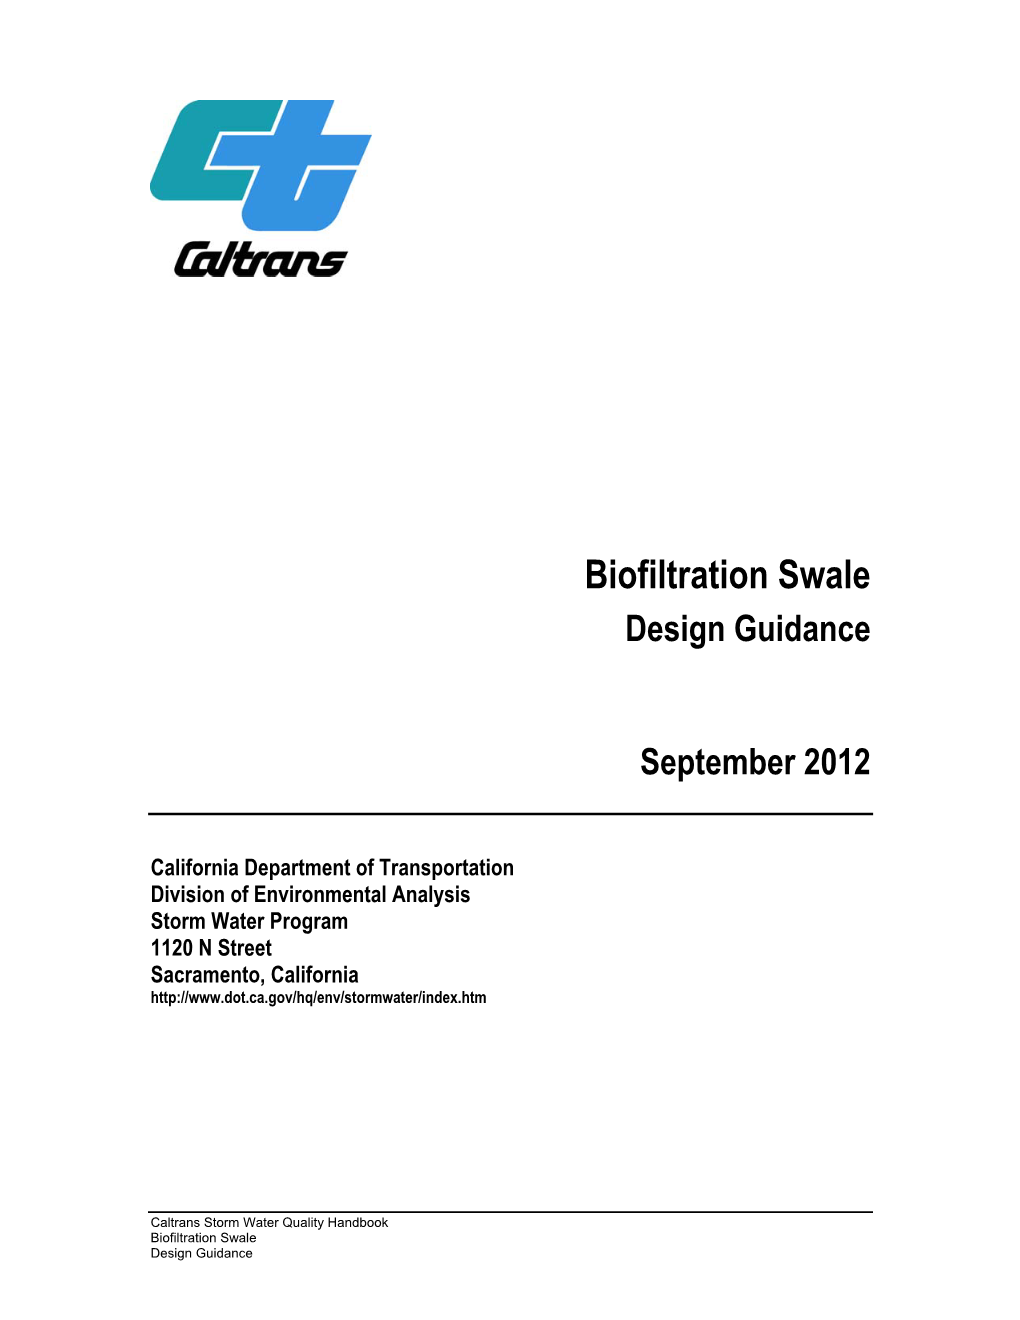 Biofiltration Swale Design Guidance